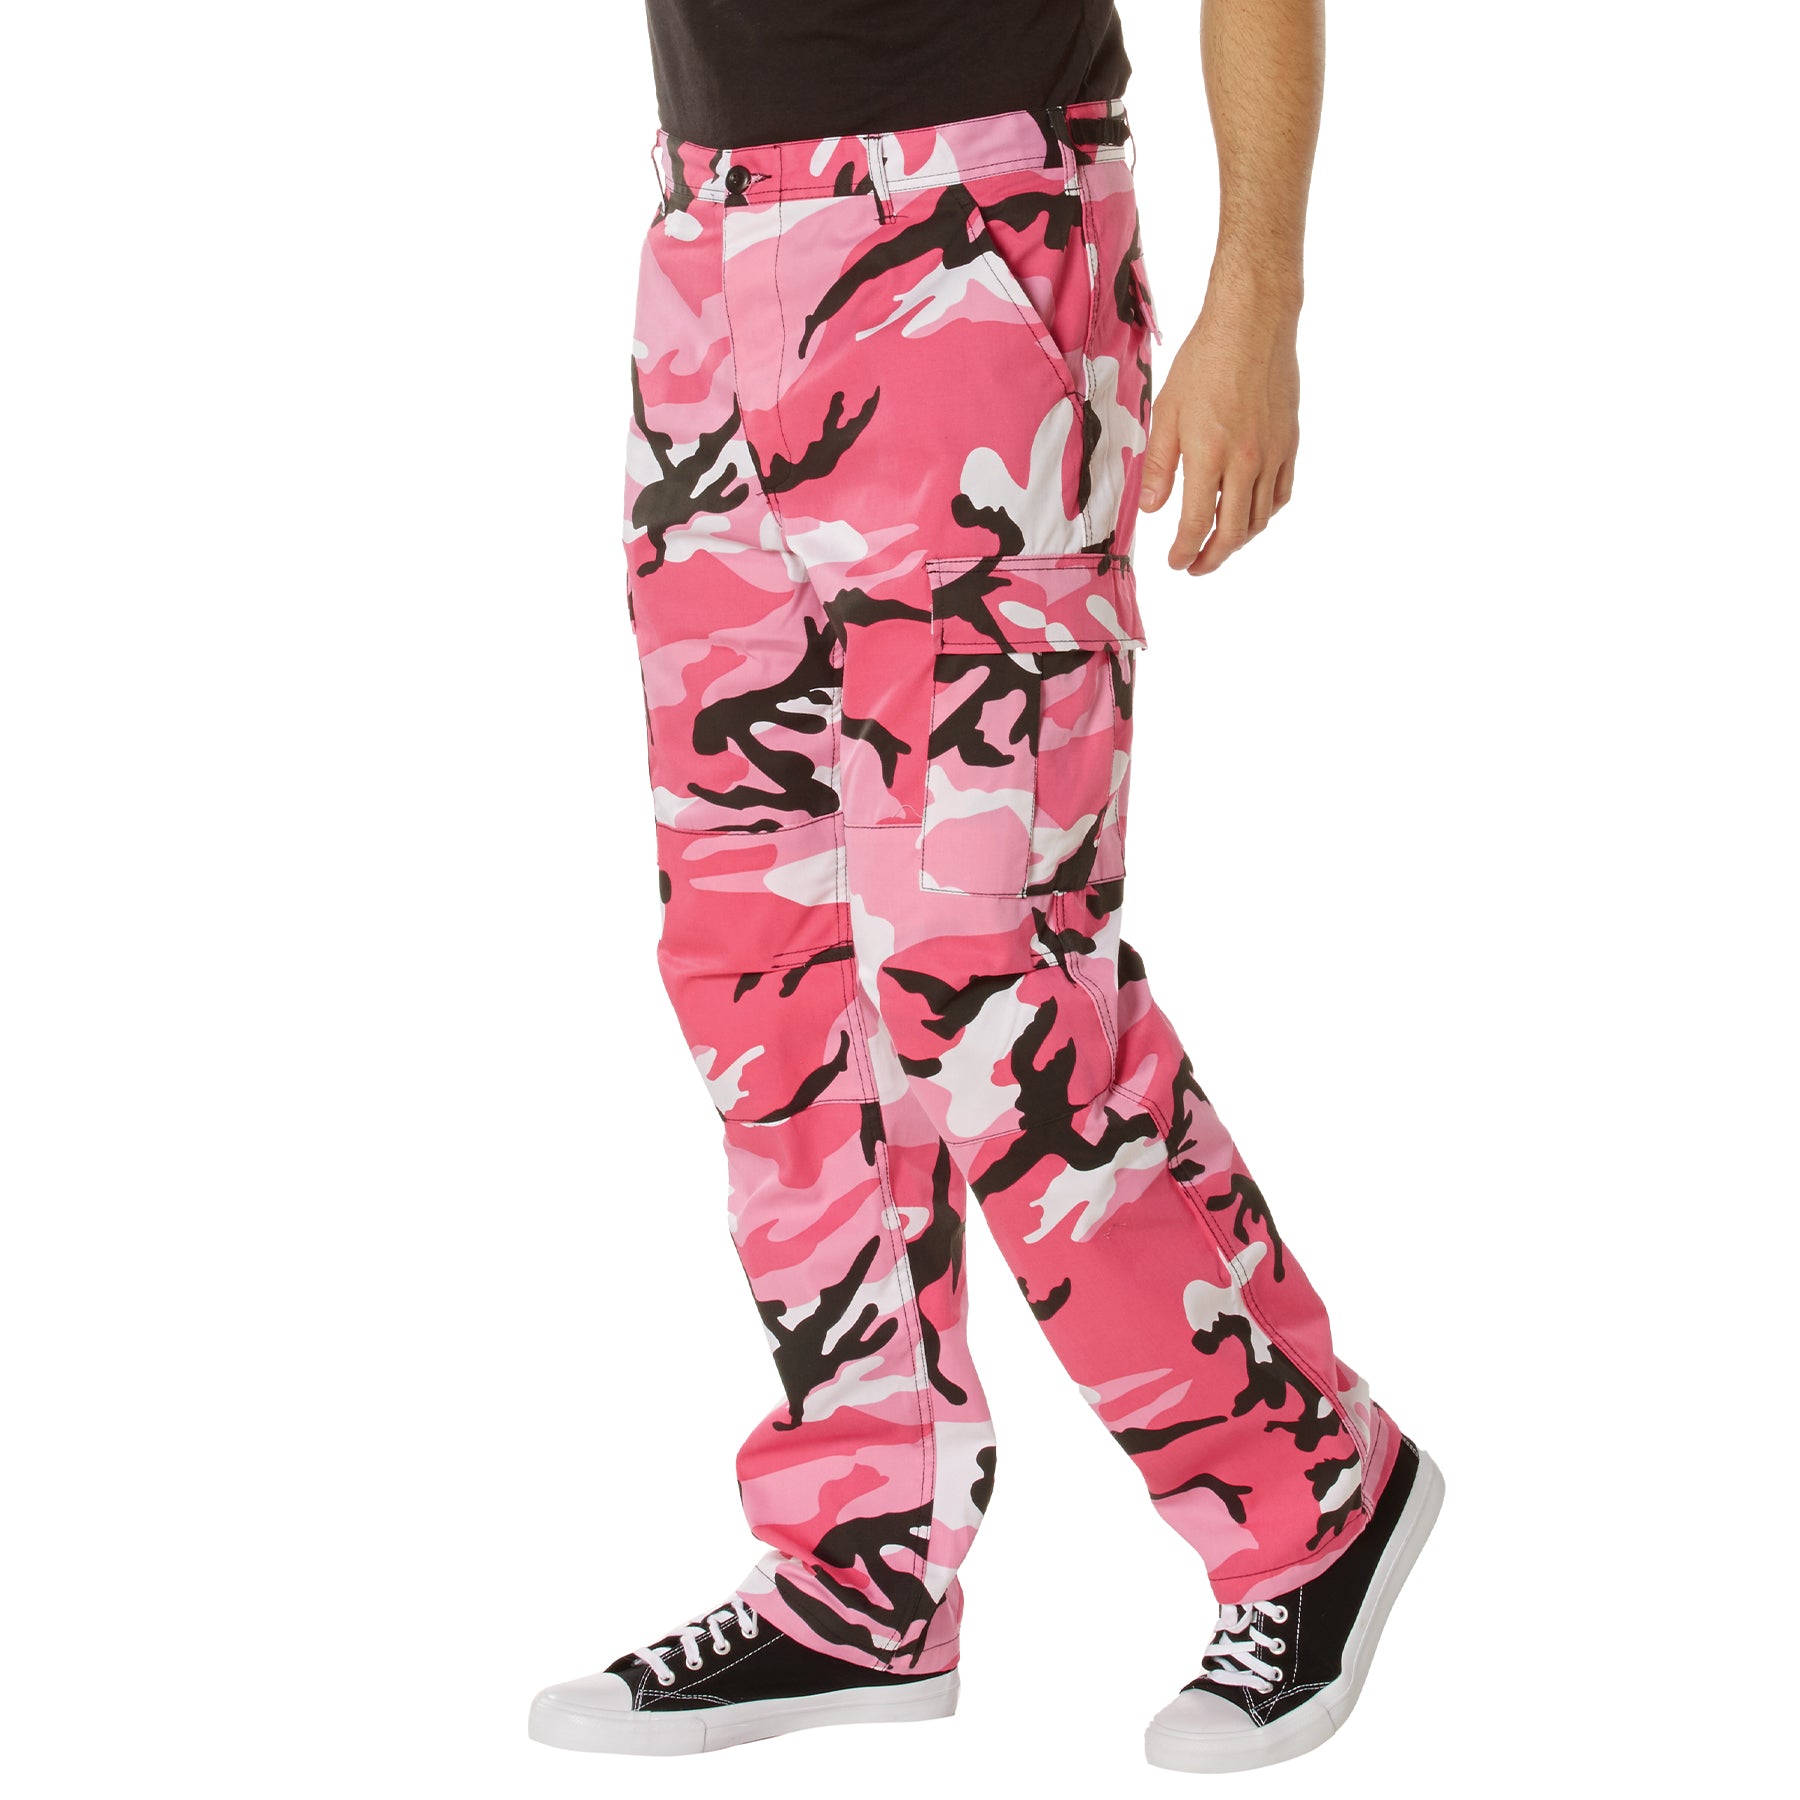 Women’s Cargo Pants Drawstring Pink Camouflage Pants Army Pants ROTHCO size  xxs